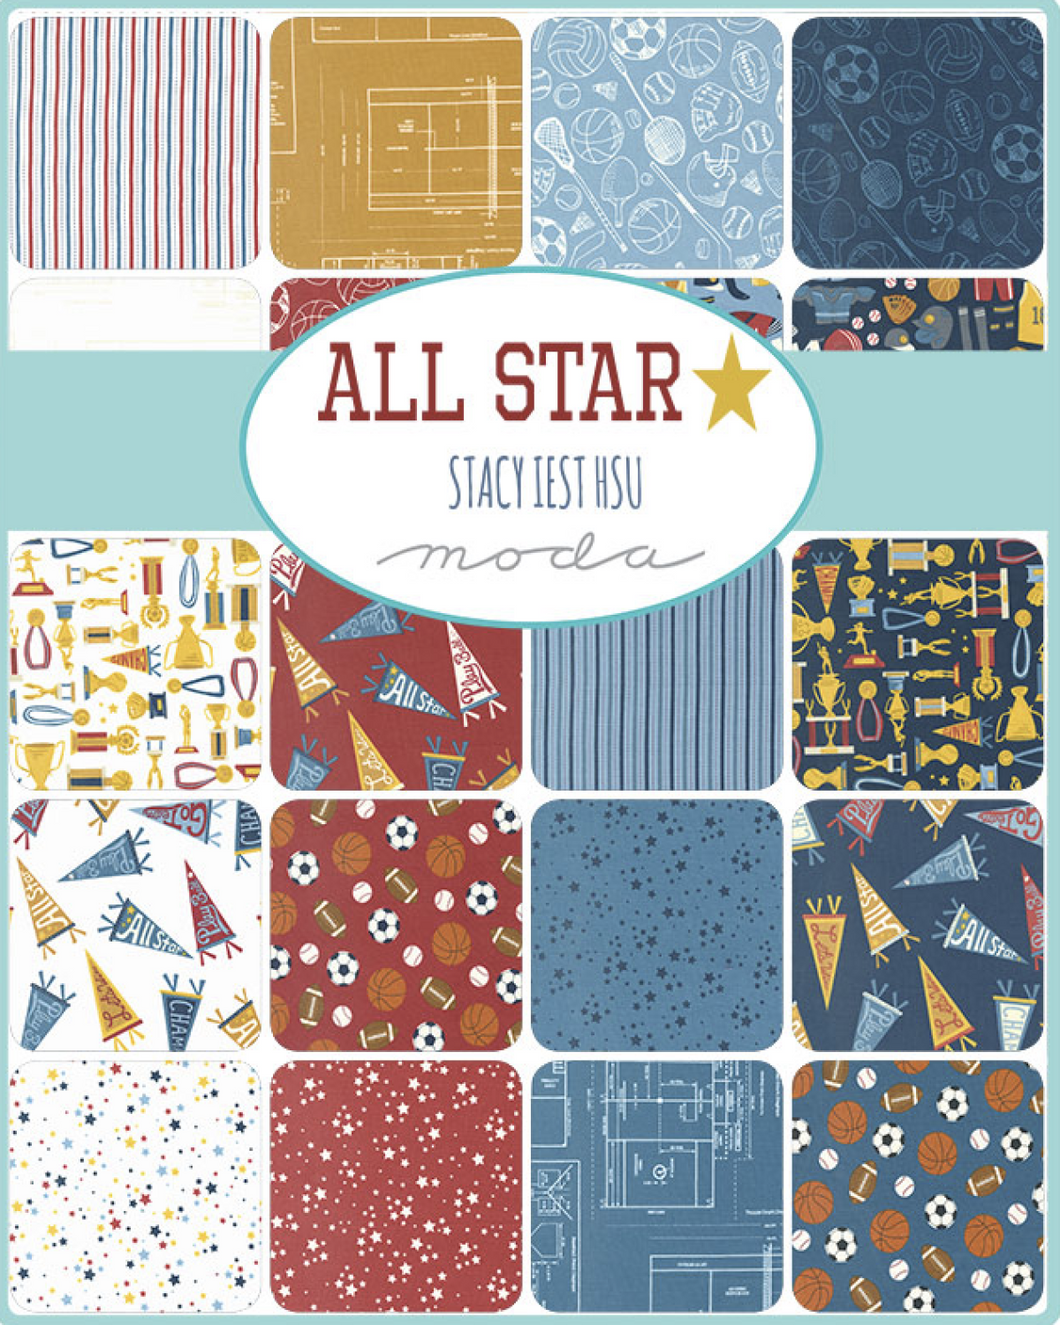 All Star JELLY ROLL by Stacy Iest Hsu for Moda Fabrics